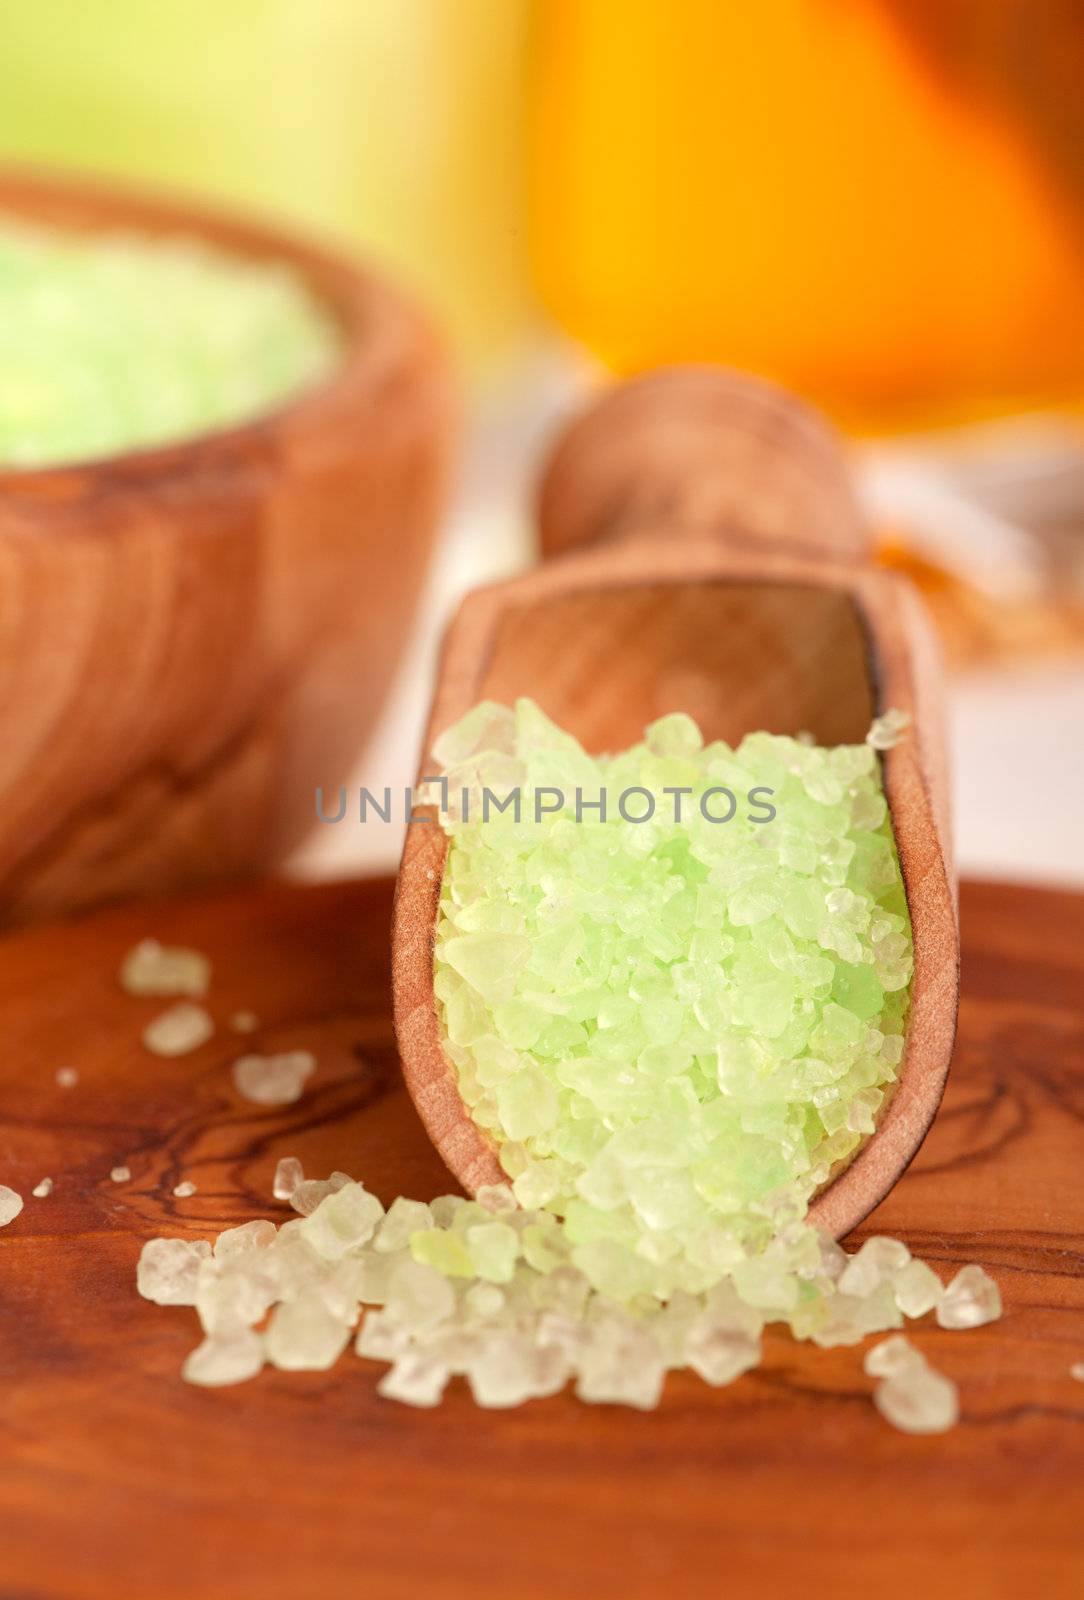 green herbal salt in the wooden spoon.